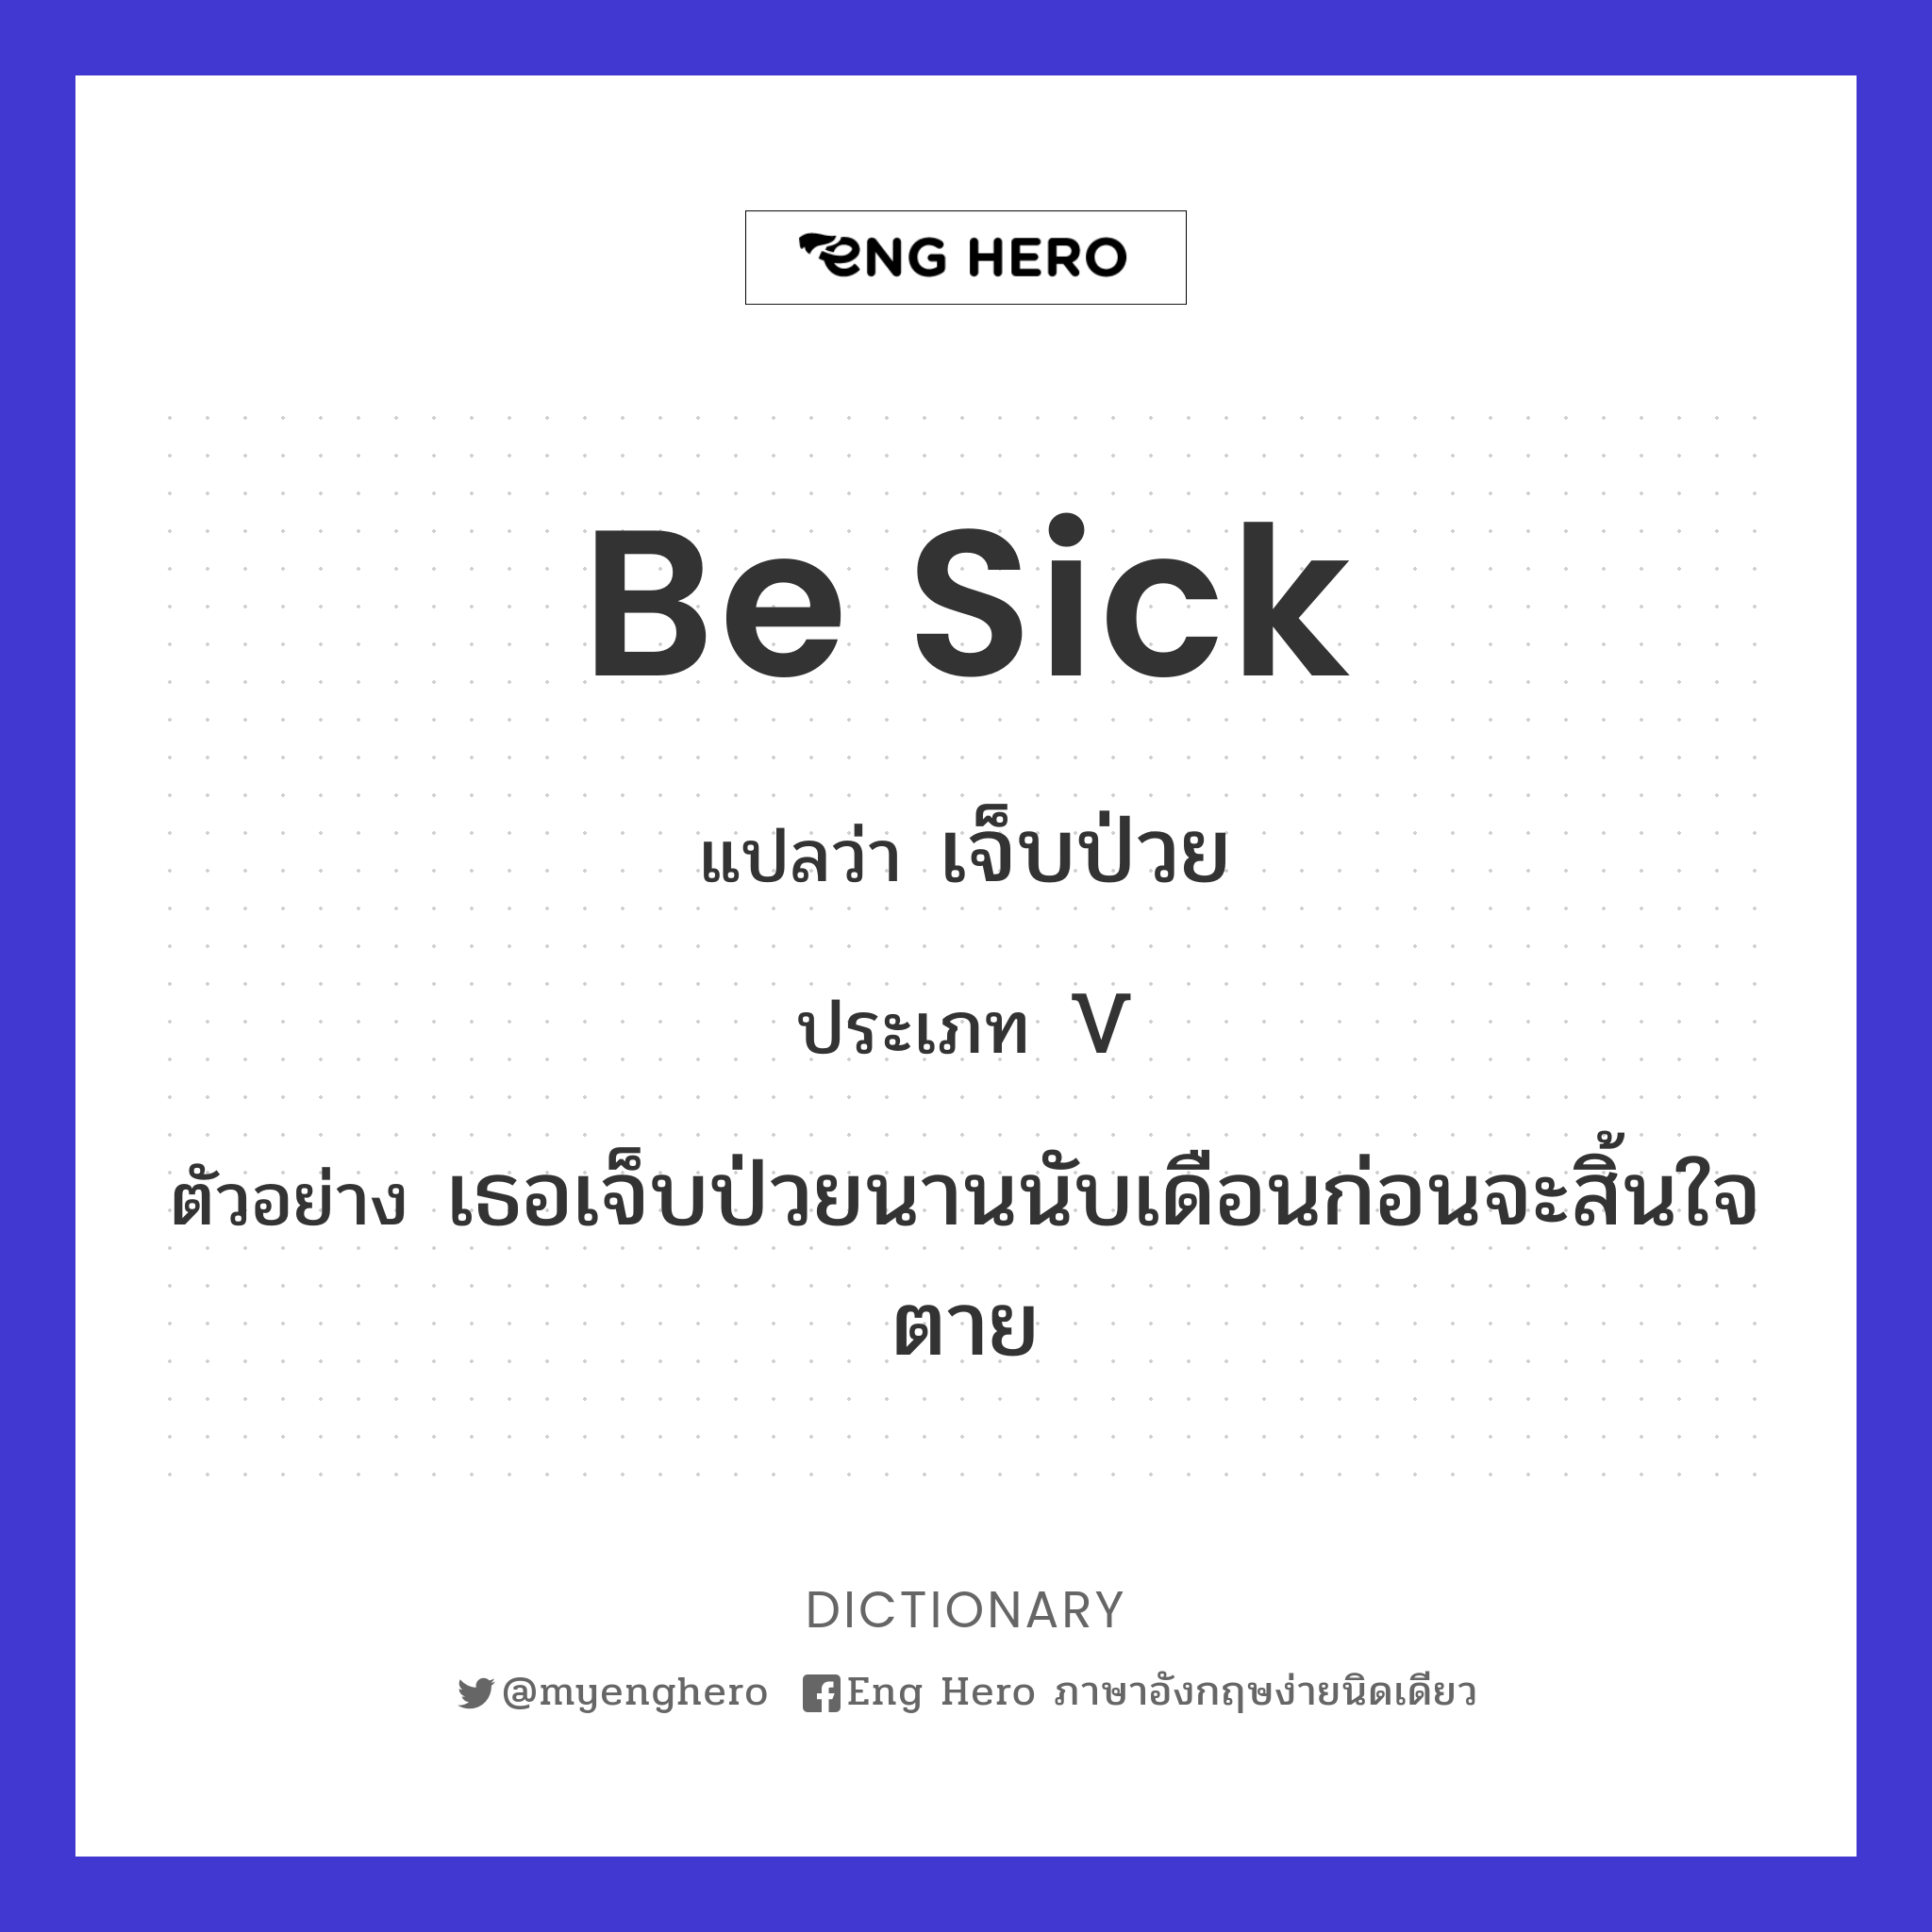 be sick